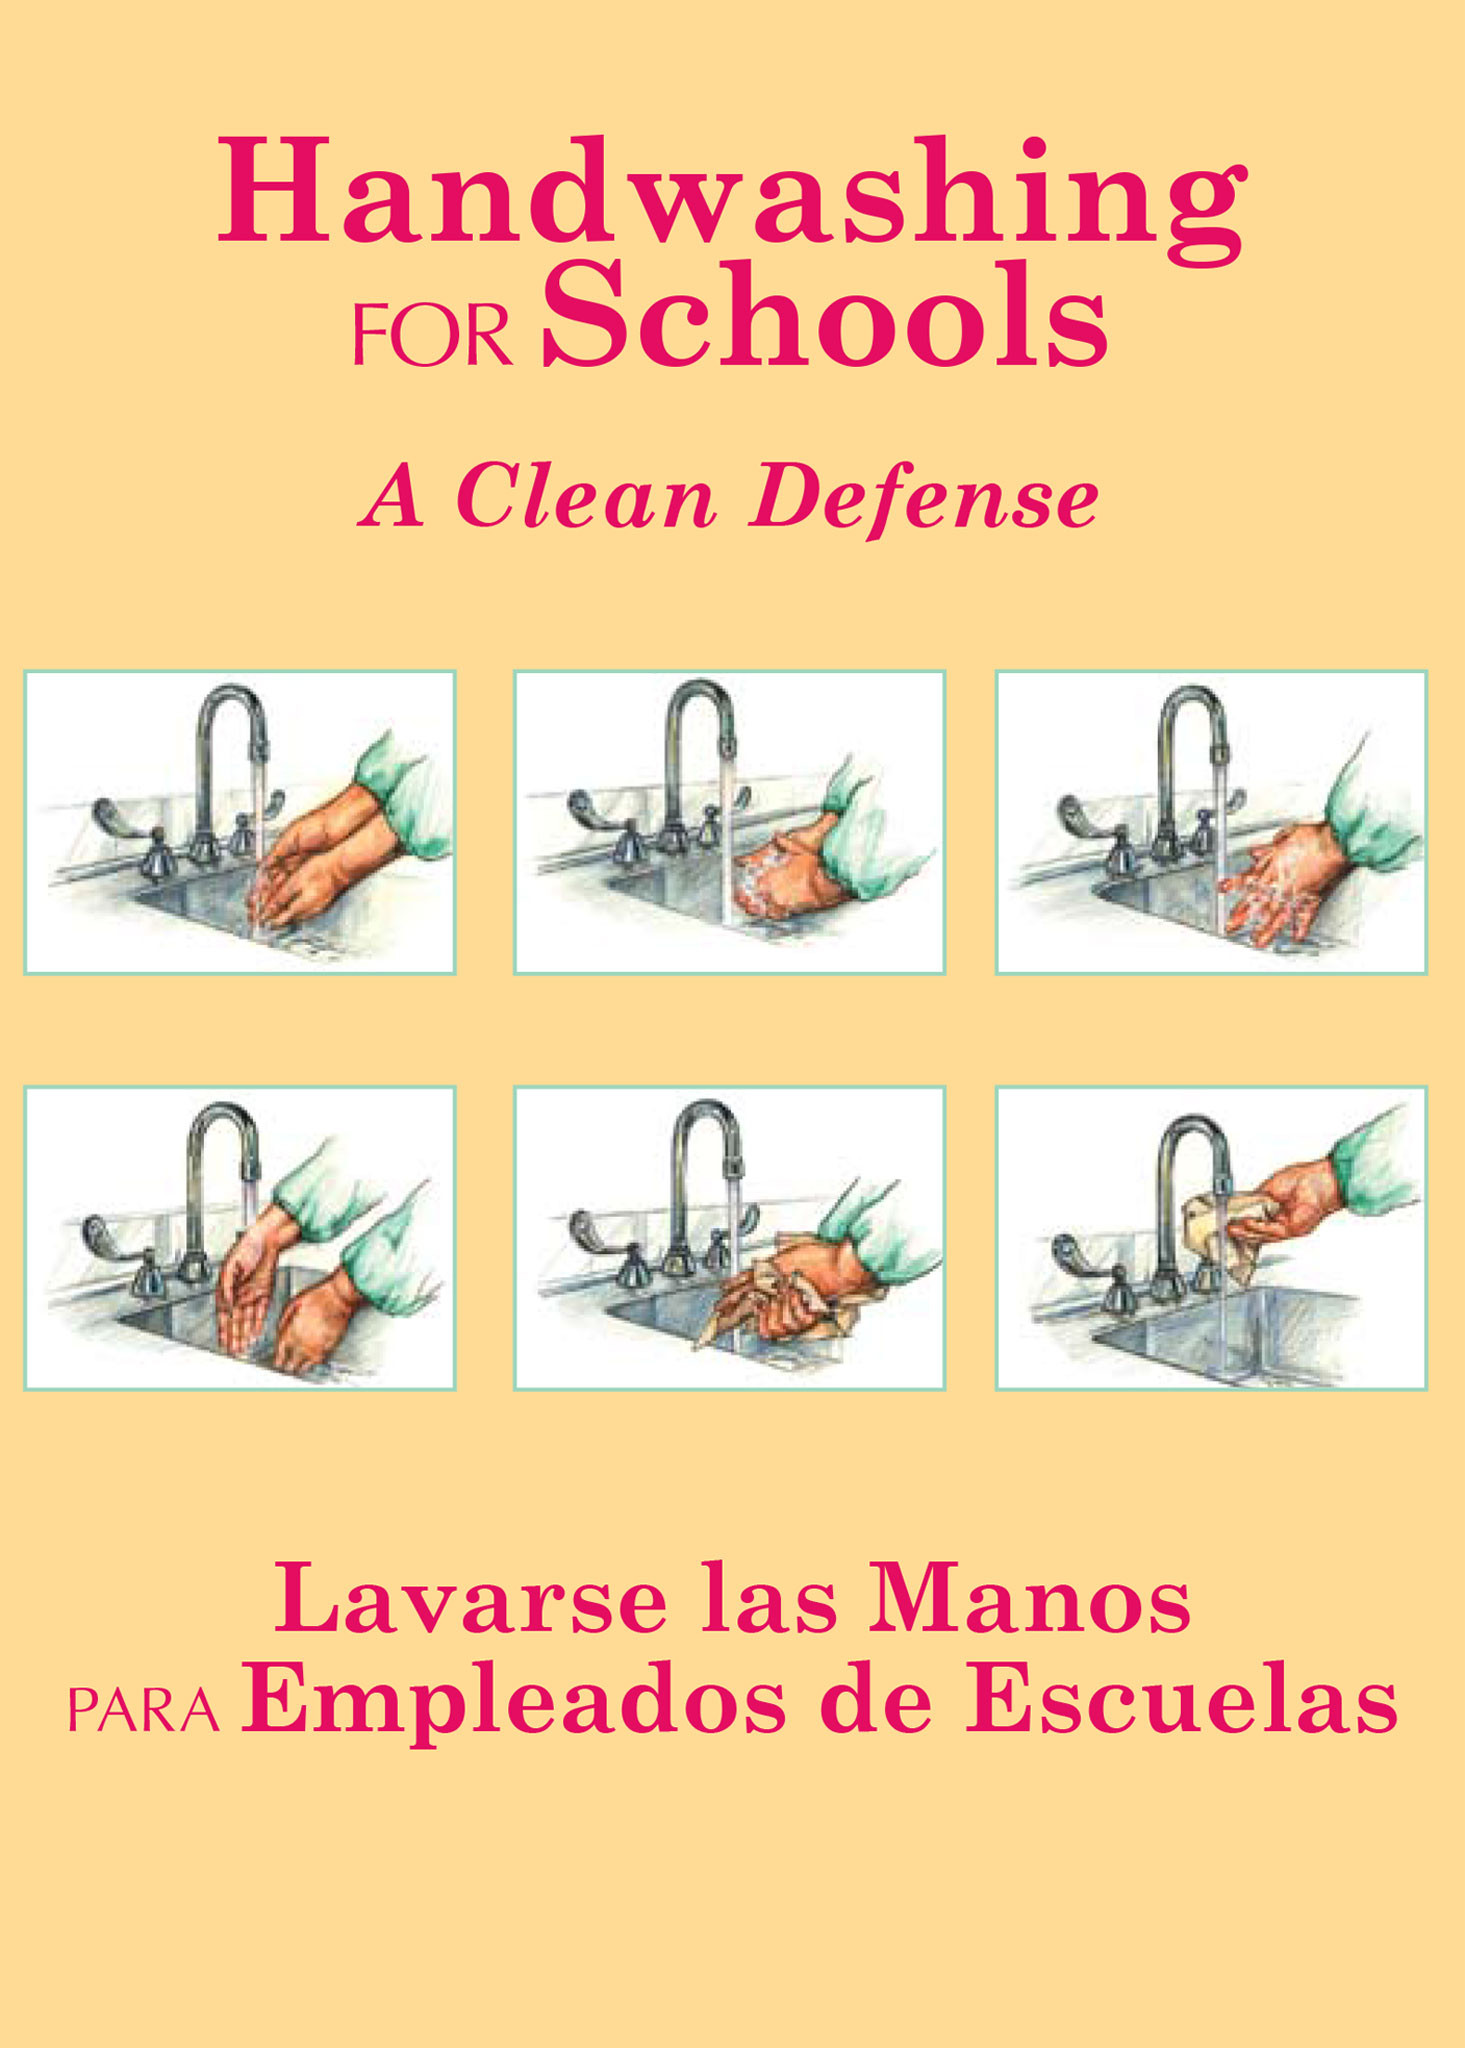 Handwashing For Schools: A Clean Defense - DVD